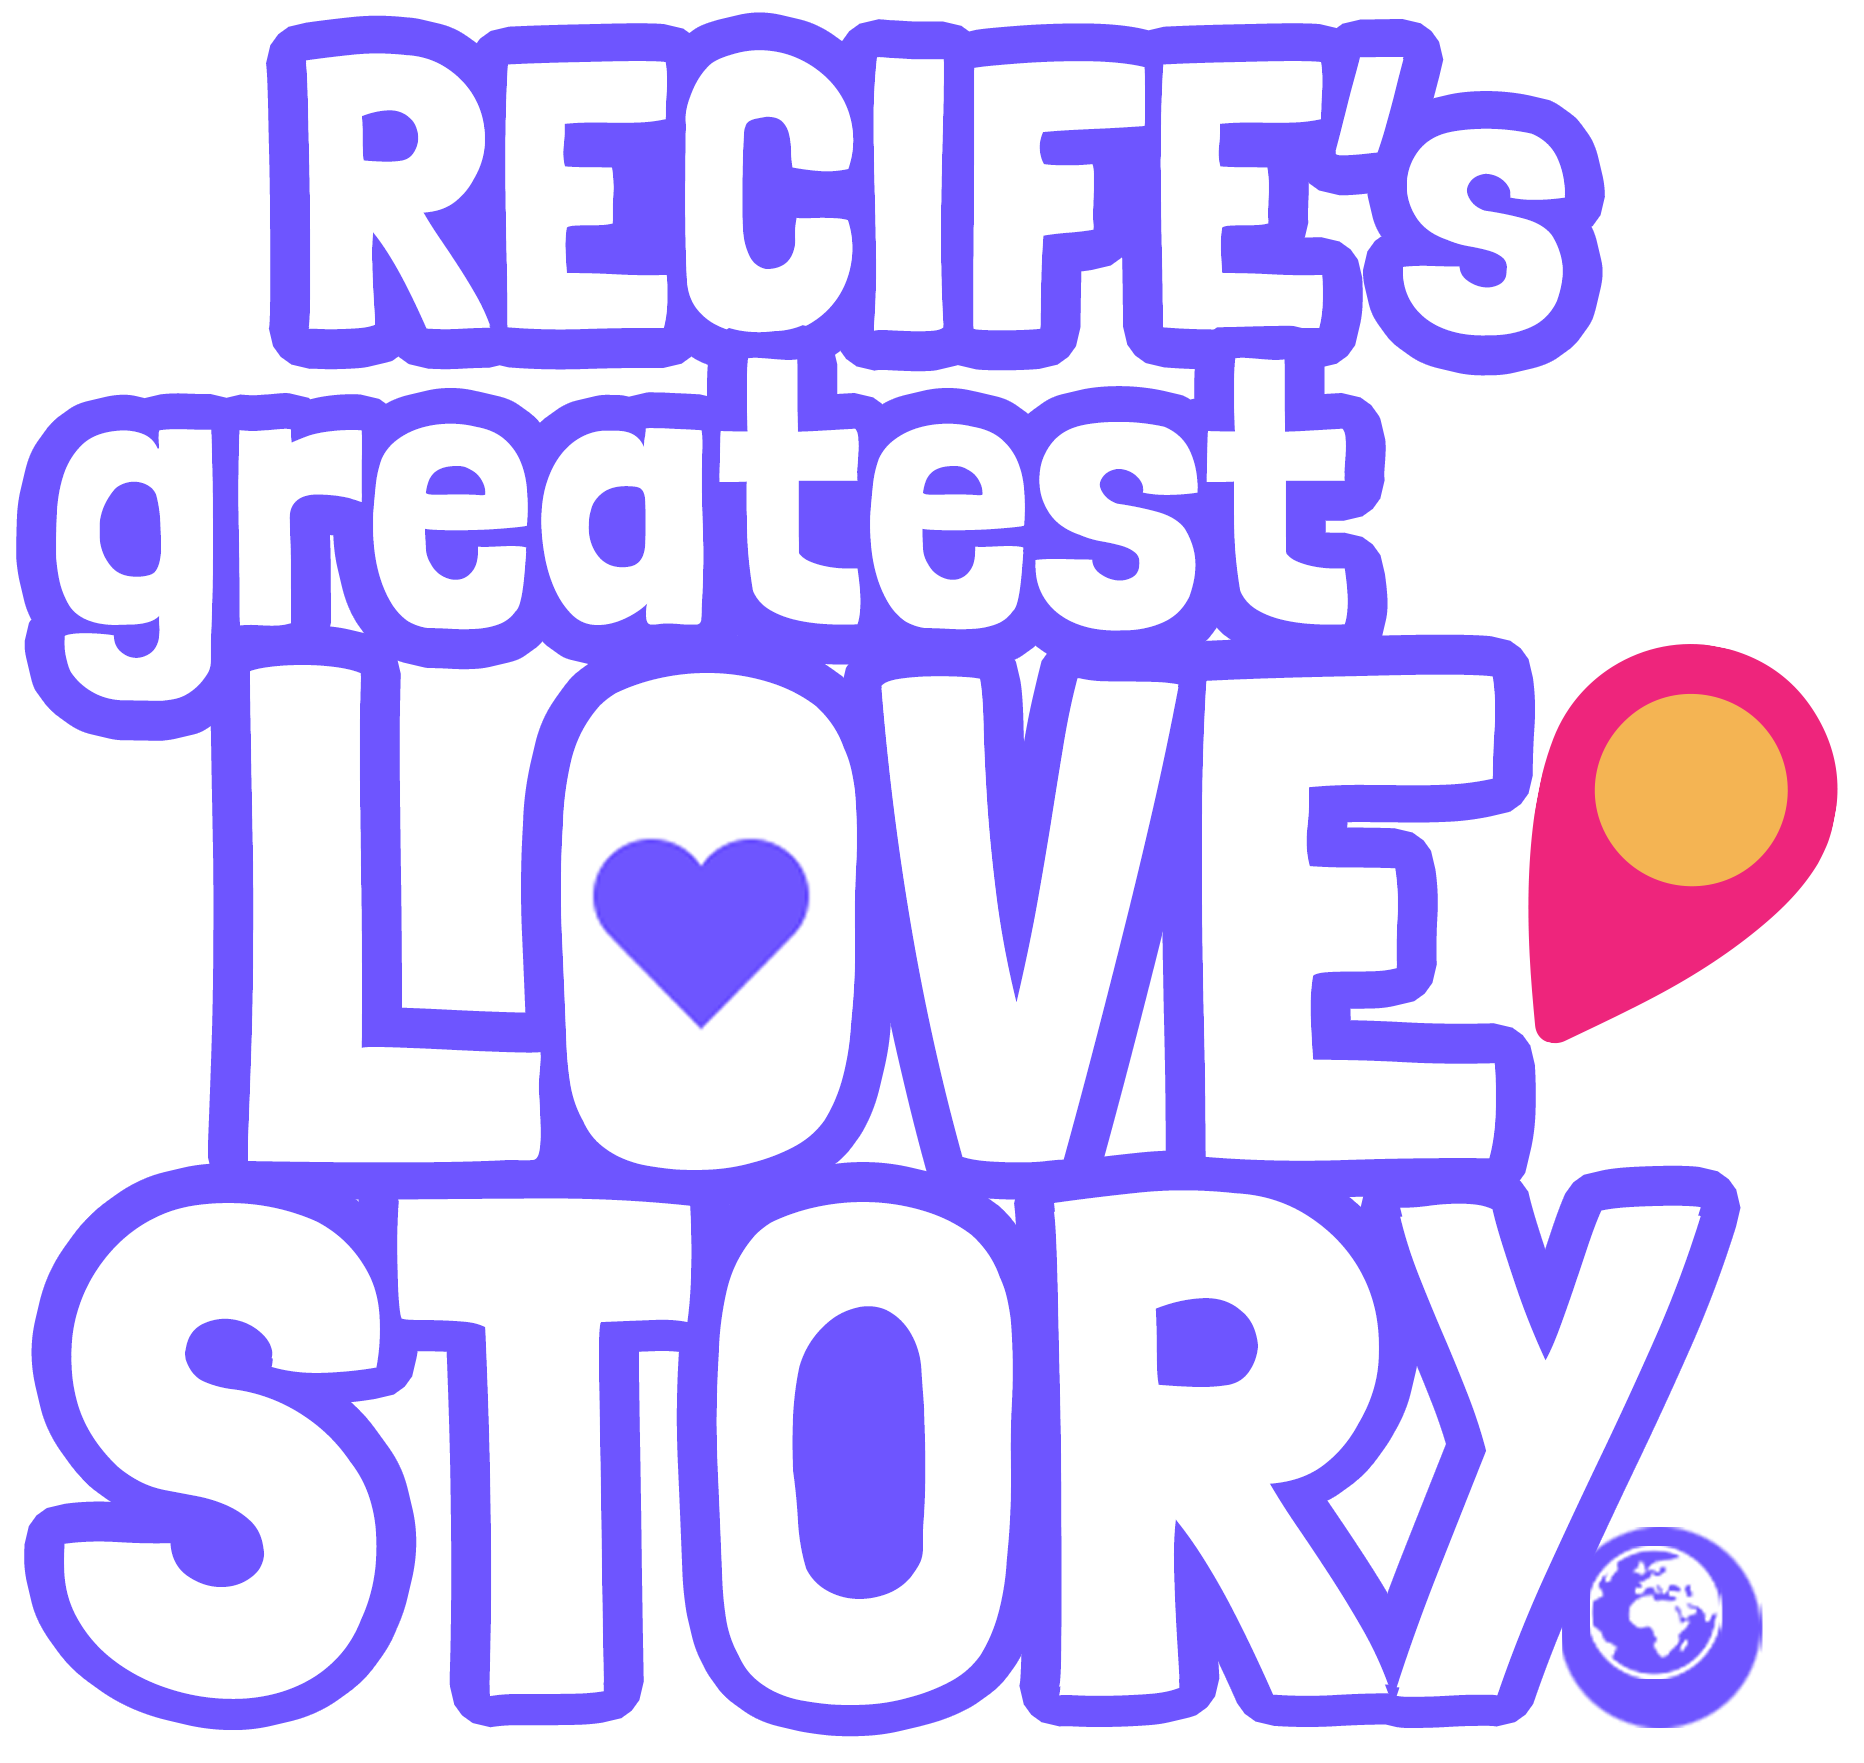 Recife's Greatest Love Story